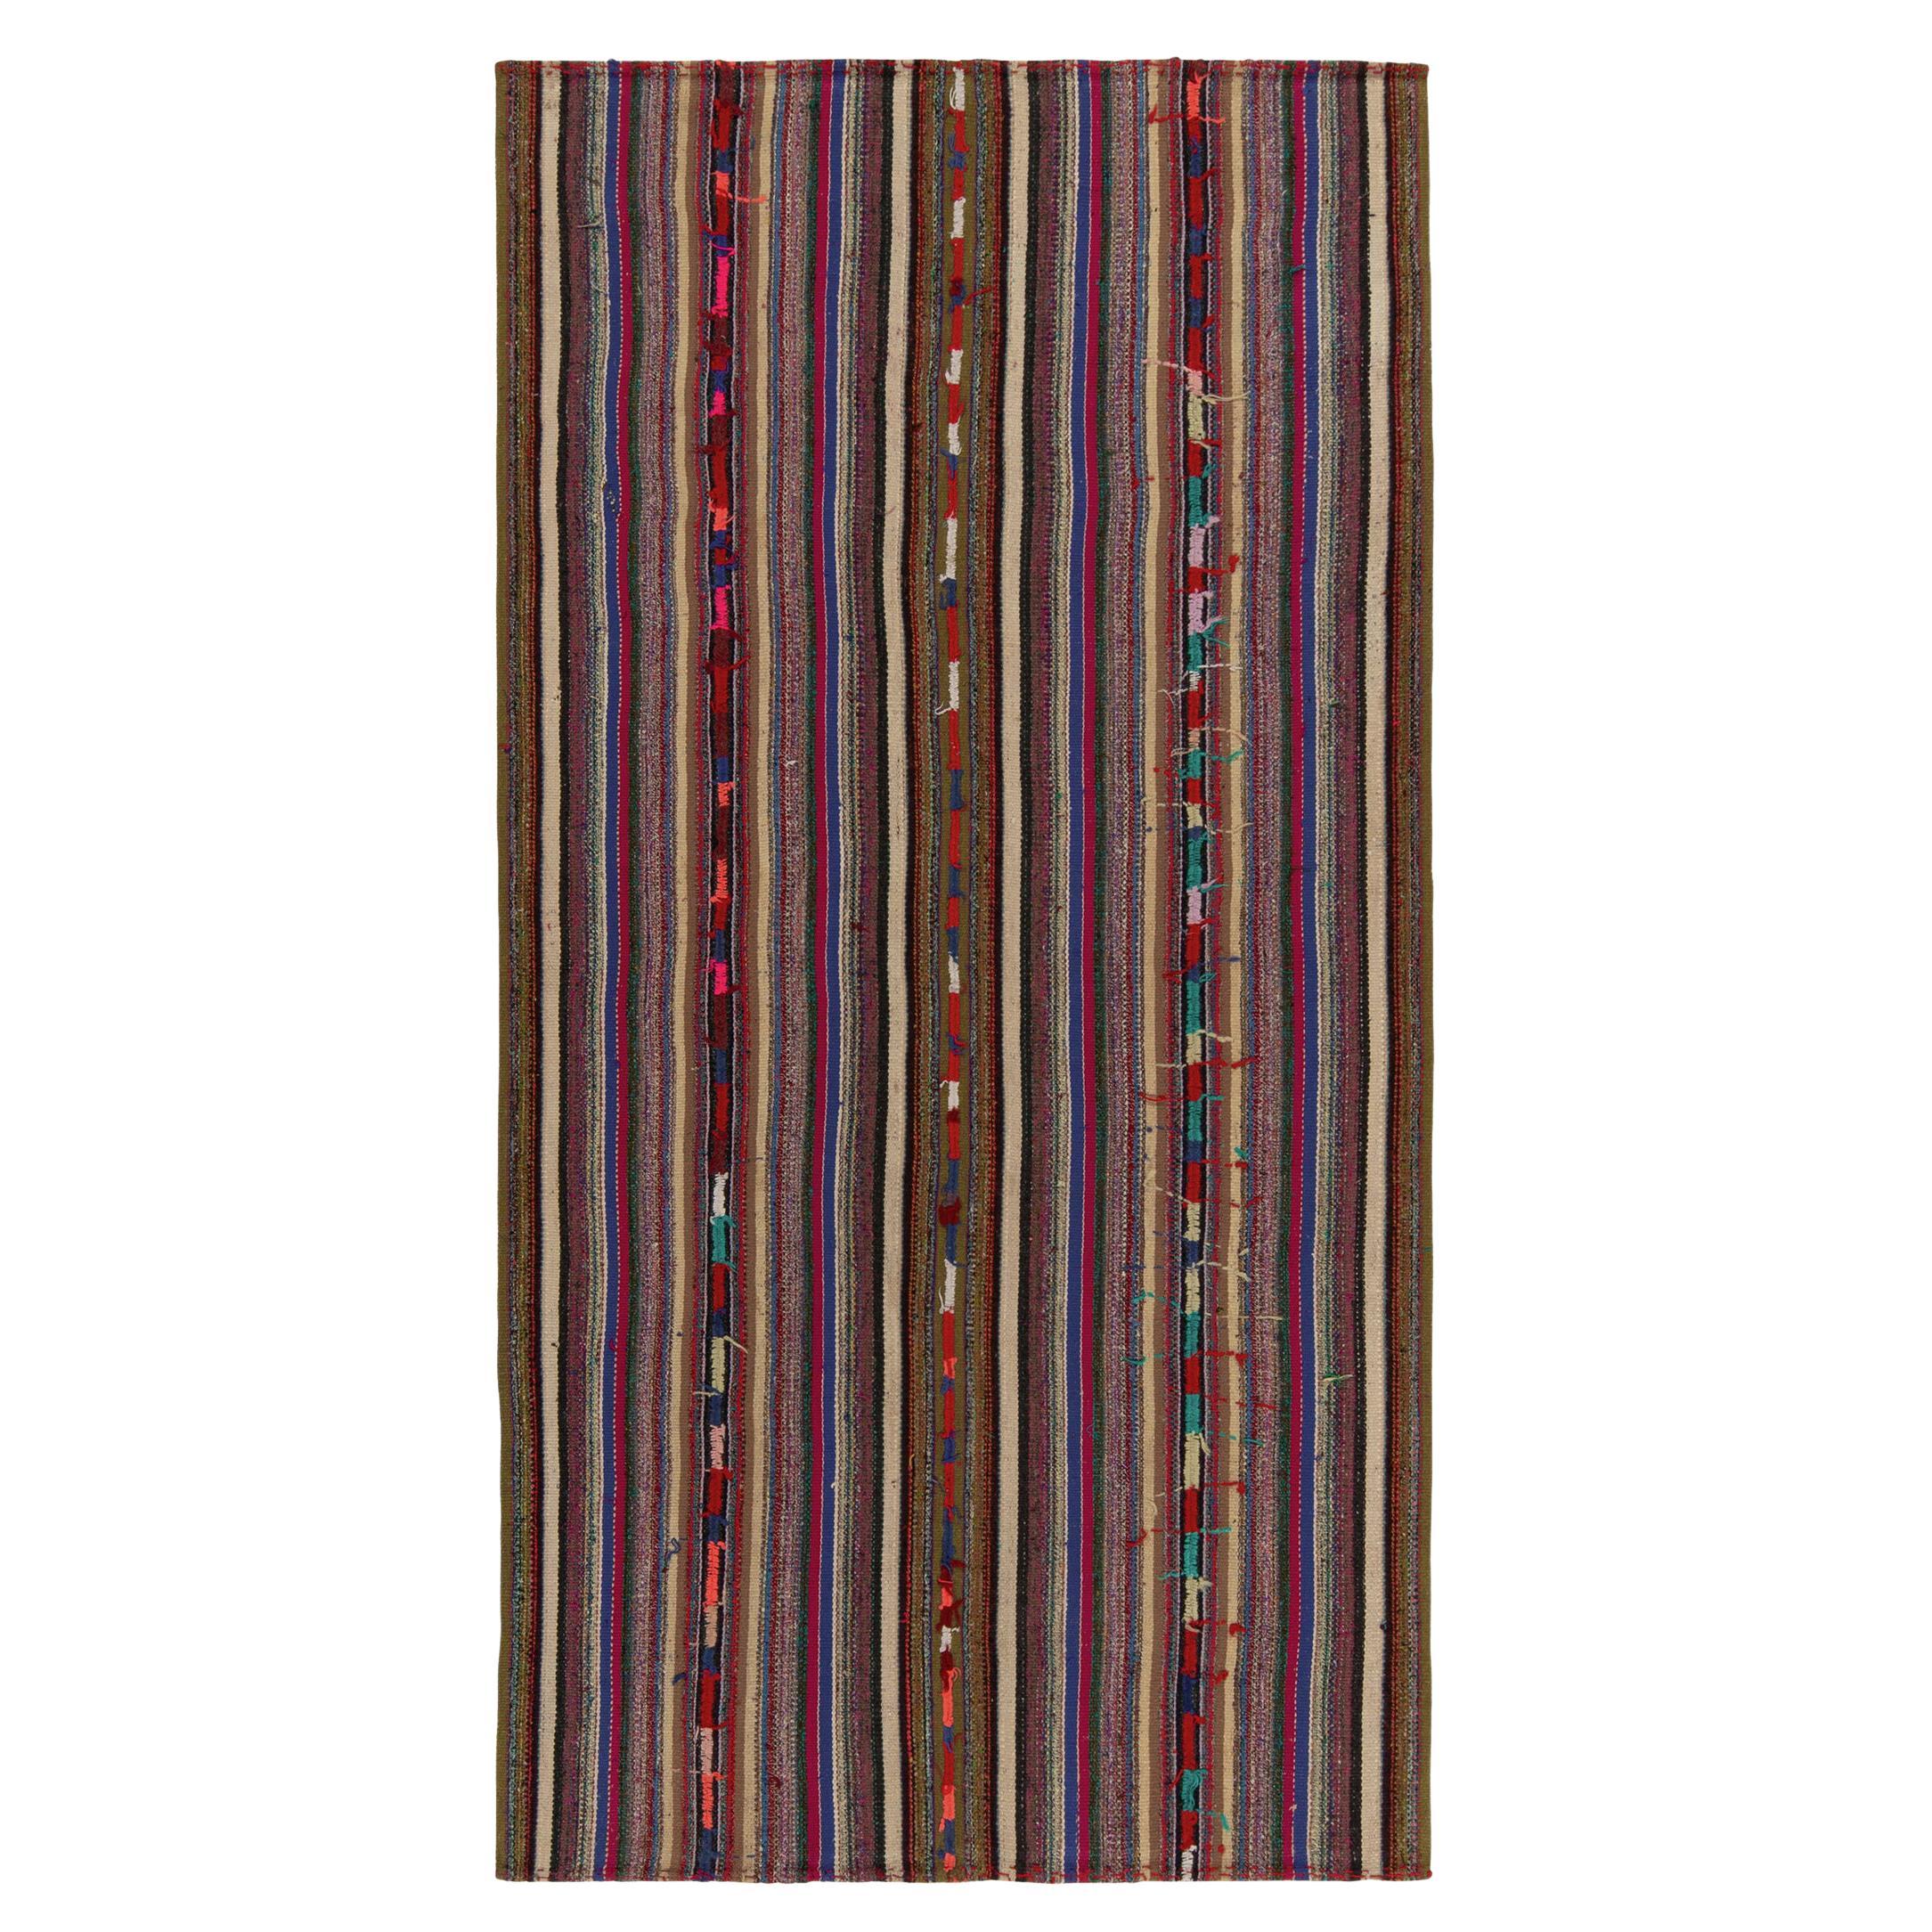 1950s Vintage Chaput Kilim in Multicolor Striped Patterns by Rug & Kilim